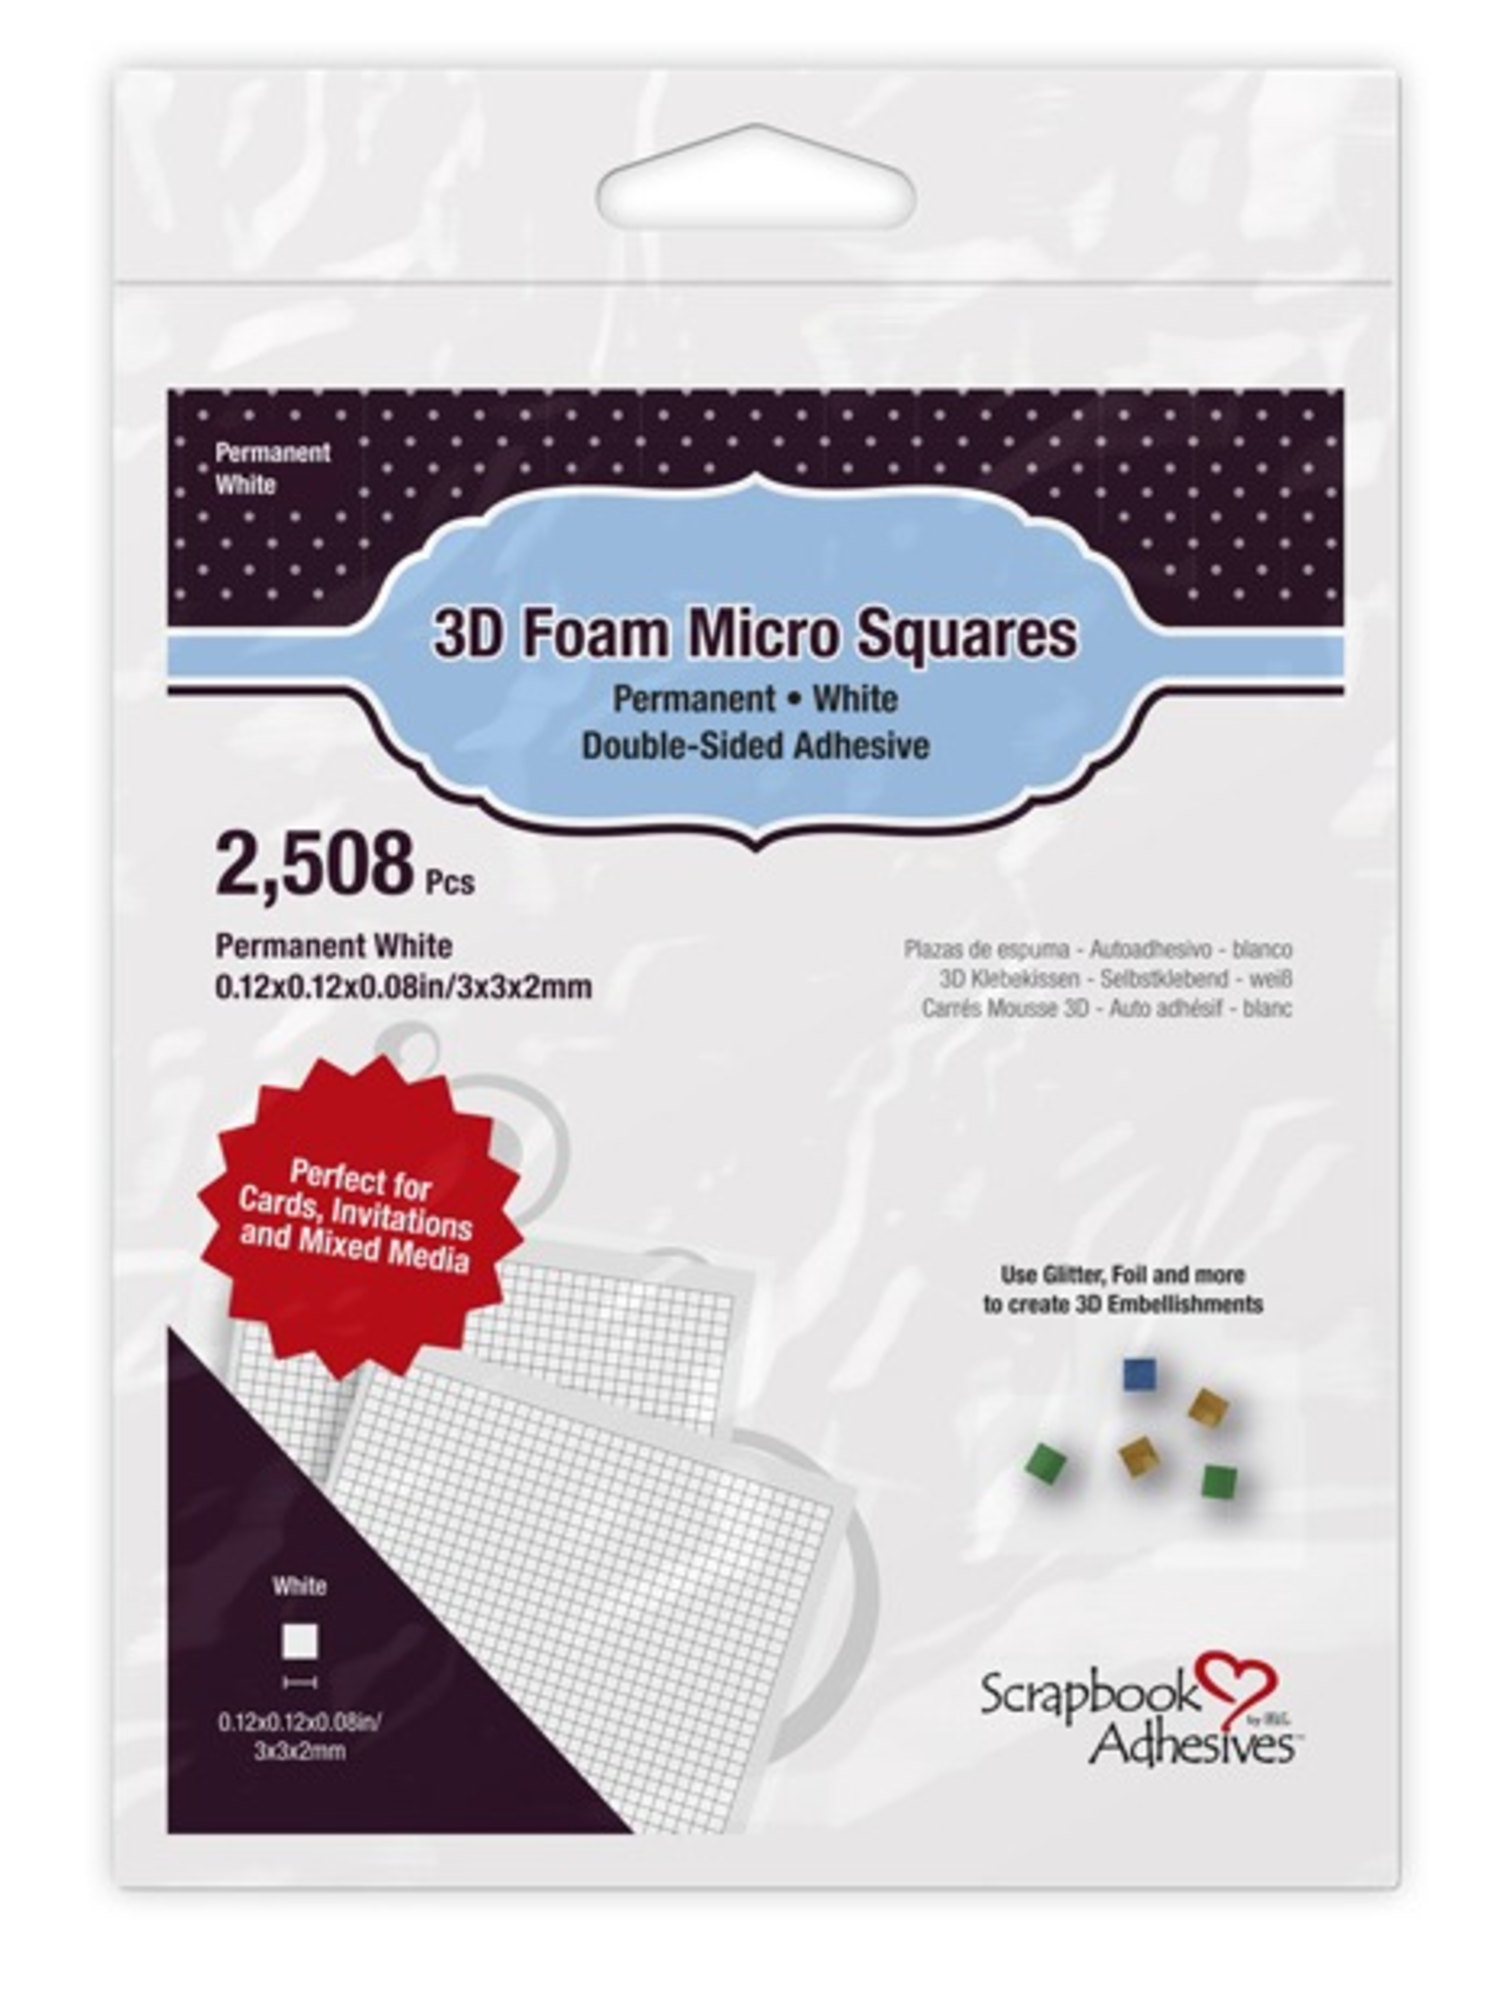 Scrapbook Adhesives 3D Foam Squares Micro White (2508 pcs)